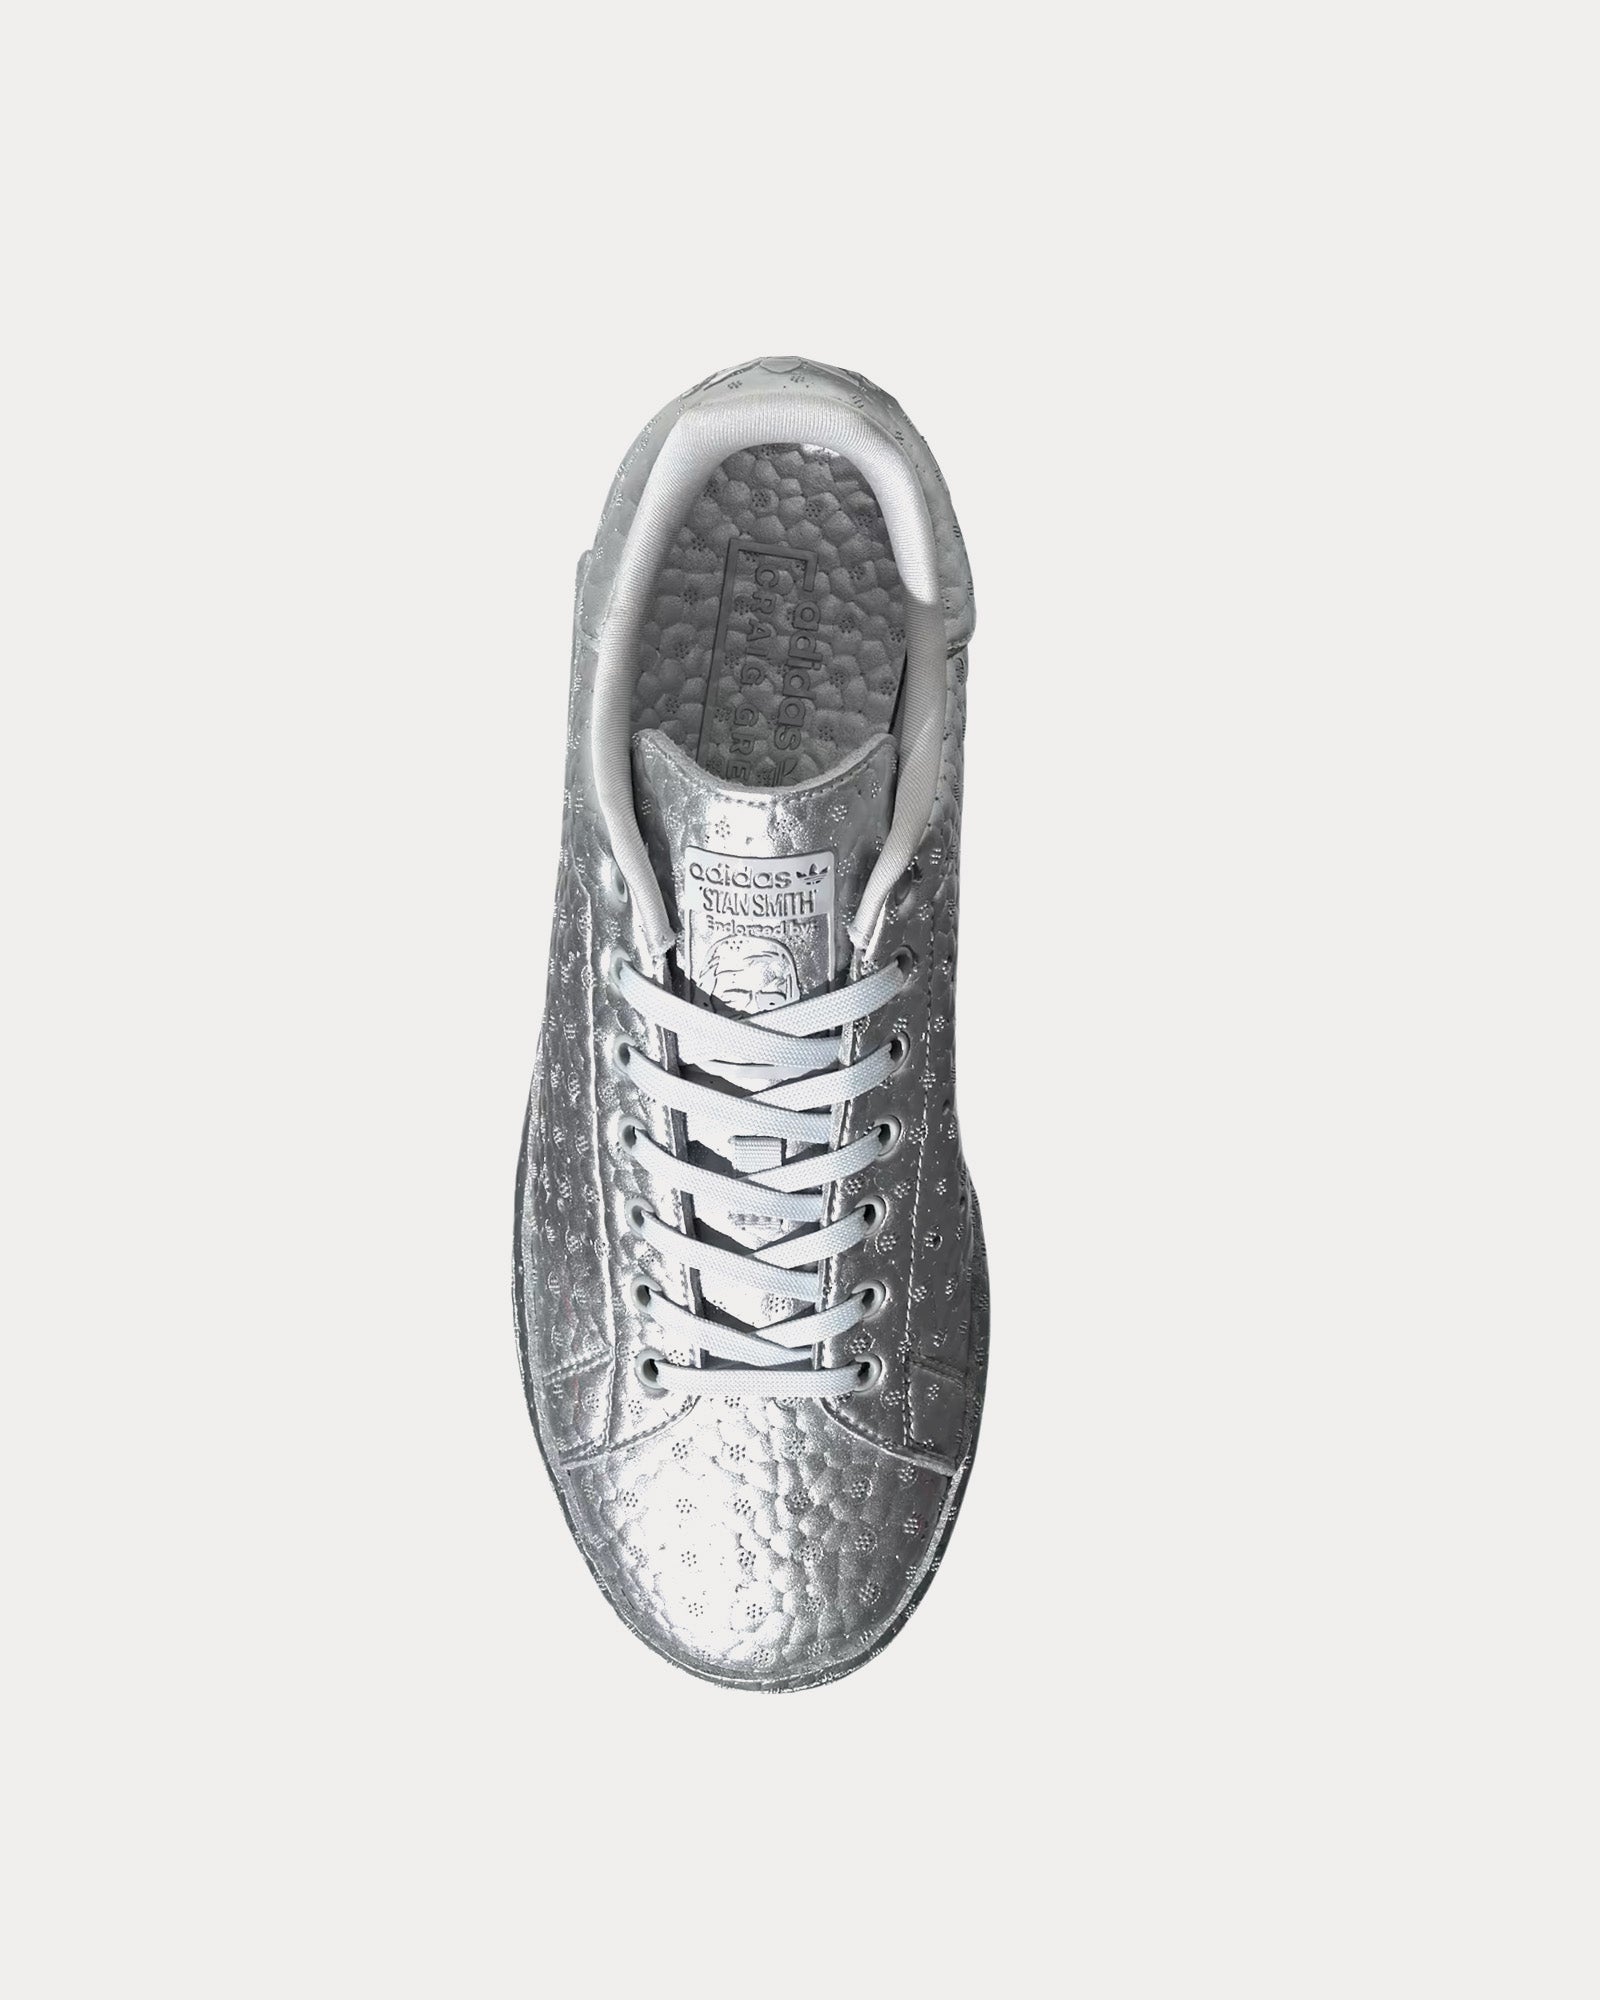 Adidas x Craig Green - Stan Smith Boost Silver Metallic / Silver Metallic / Mgh Solid Grey Low Top Sneakers